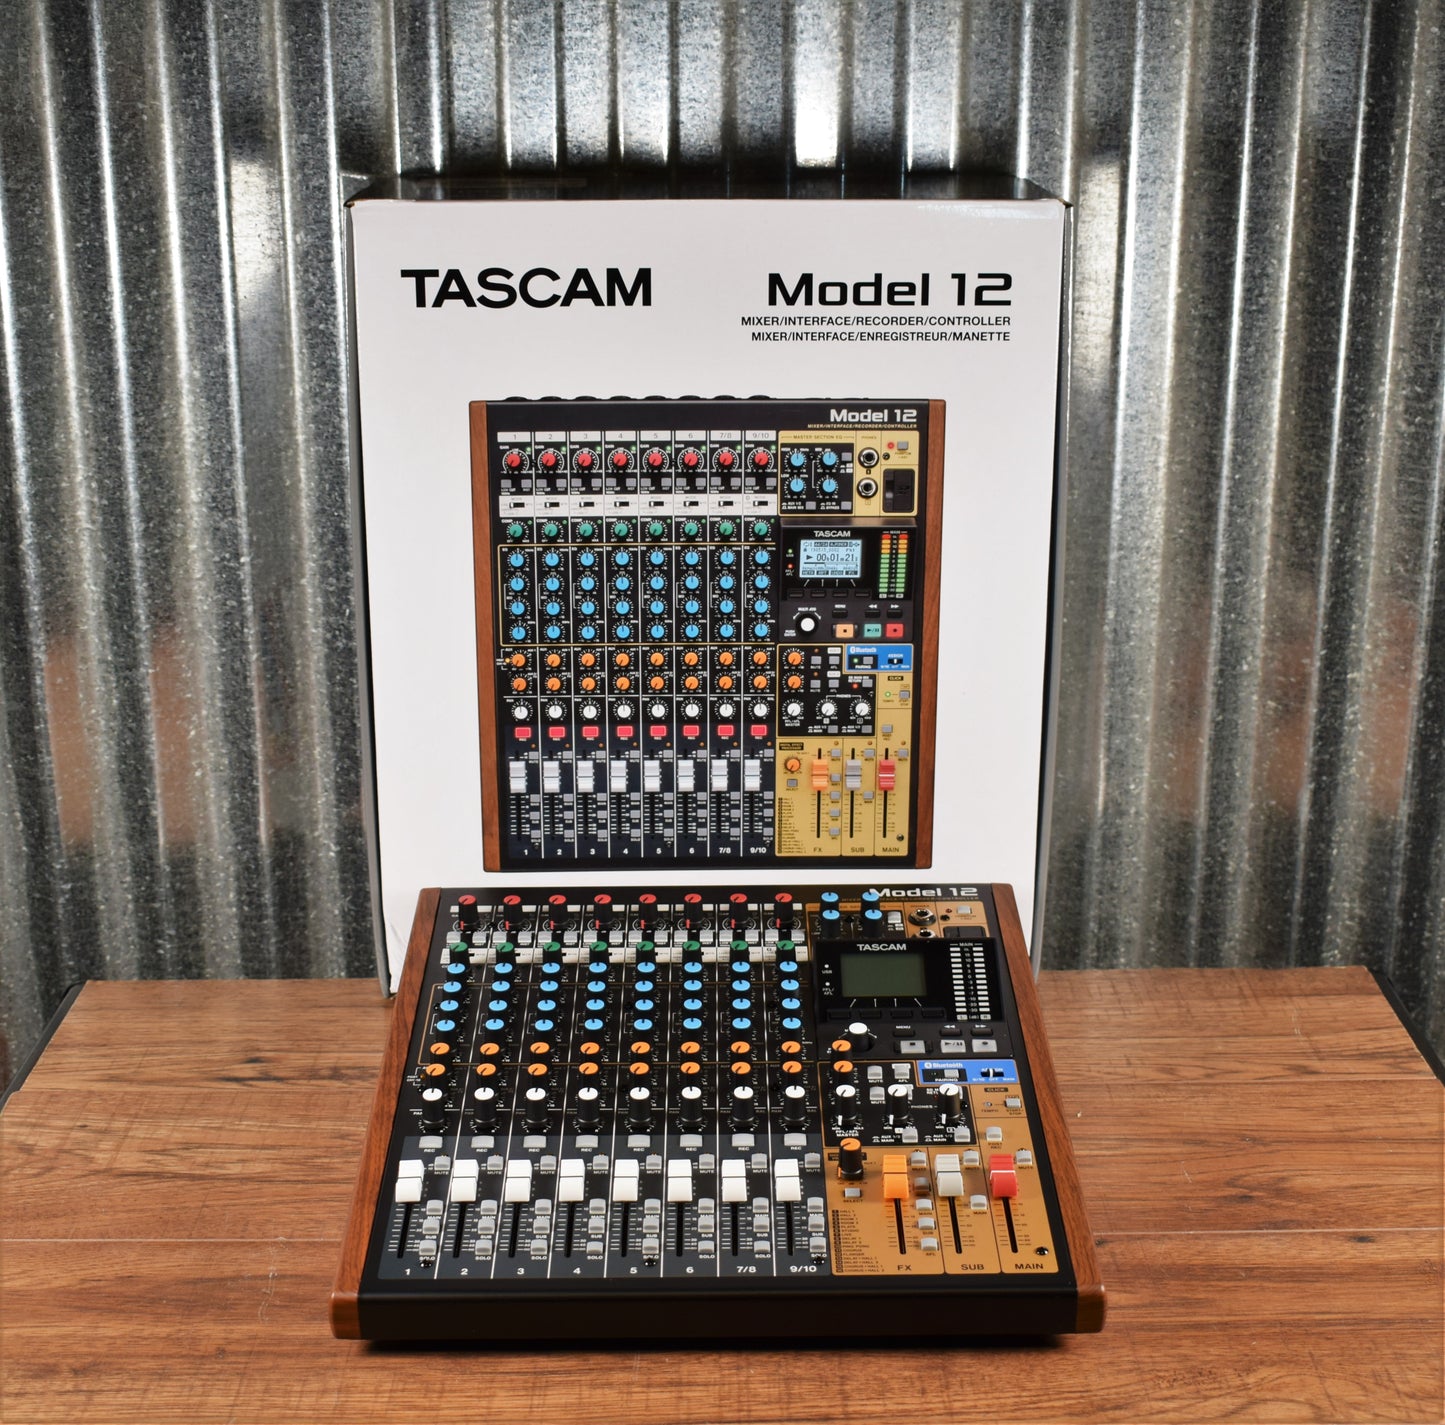 Tascam Model 12 Mixer USB Audio Interface Recorder Controller B Stock